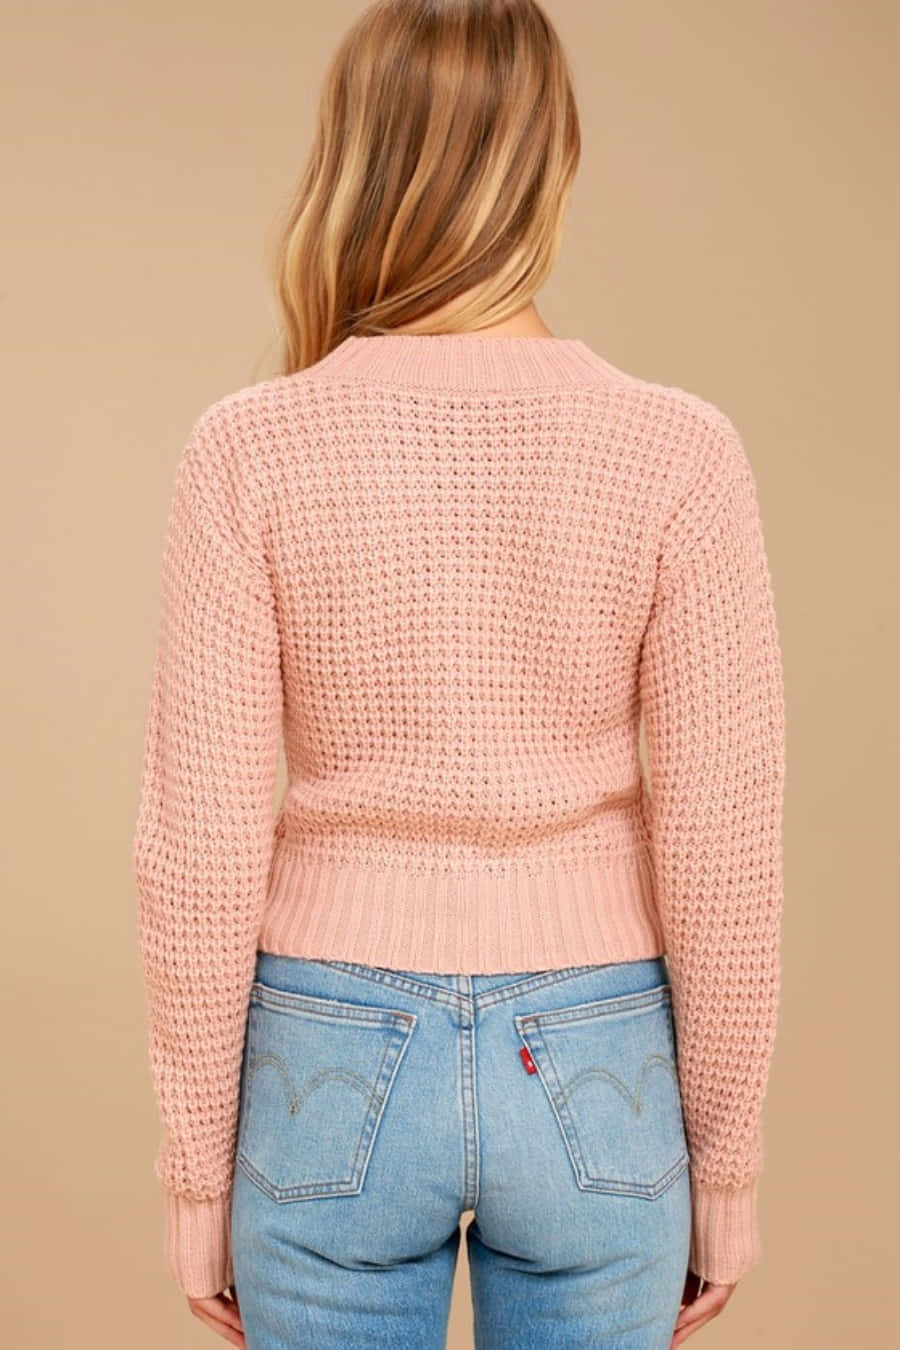 Cozy Pink Sweater on Hanger Wallpaper